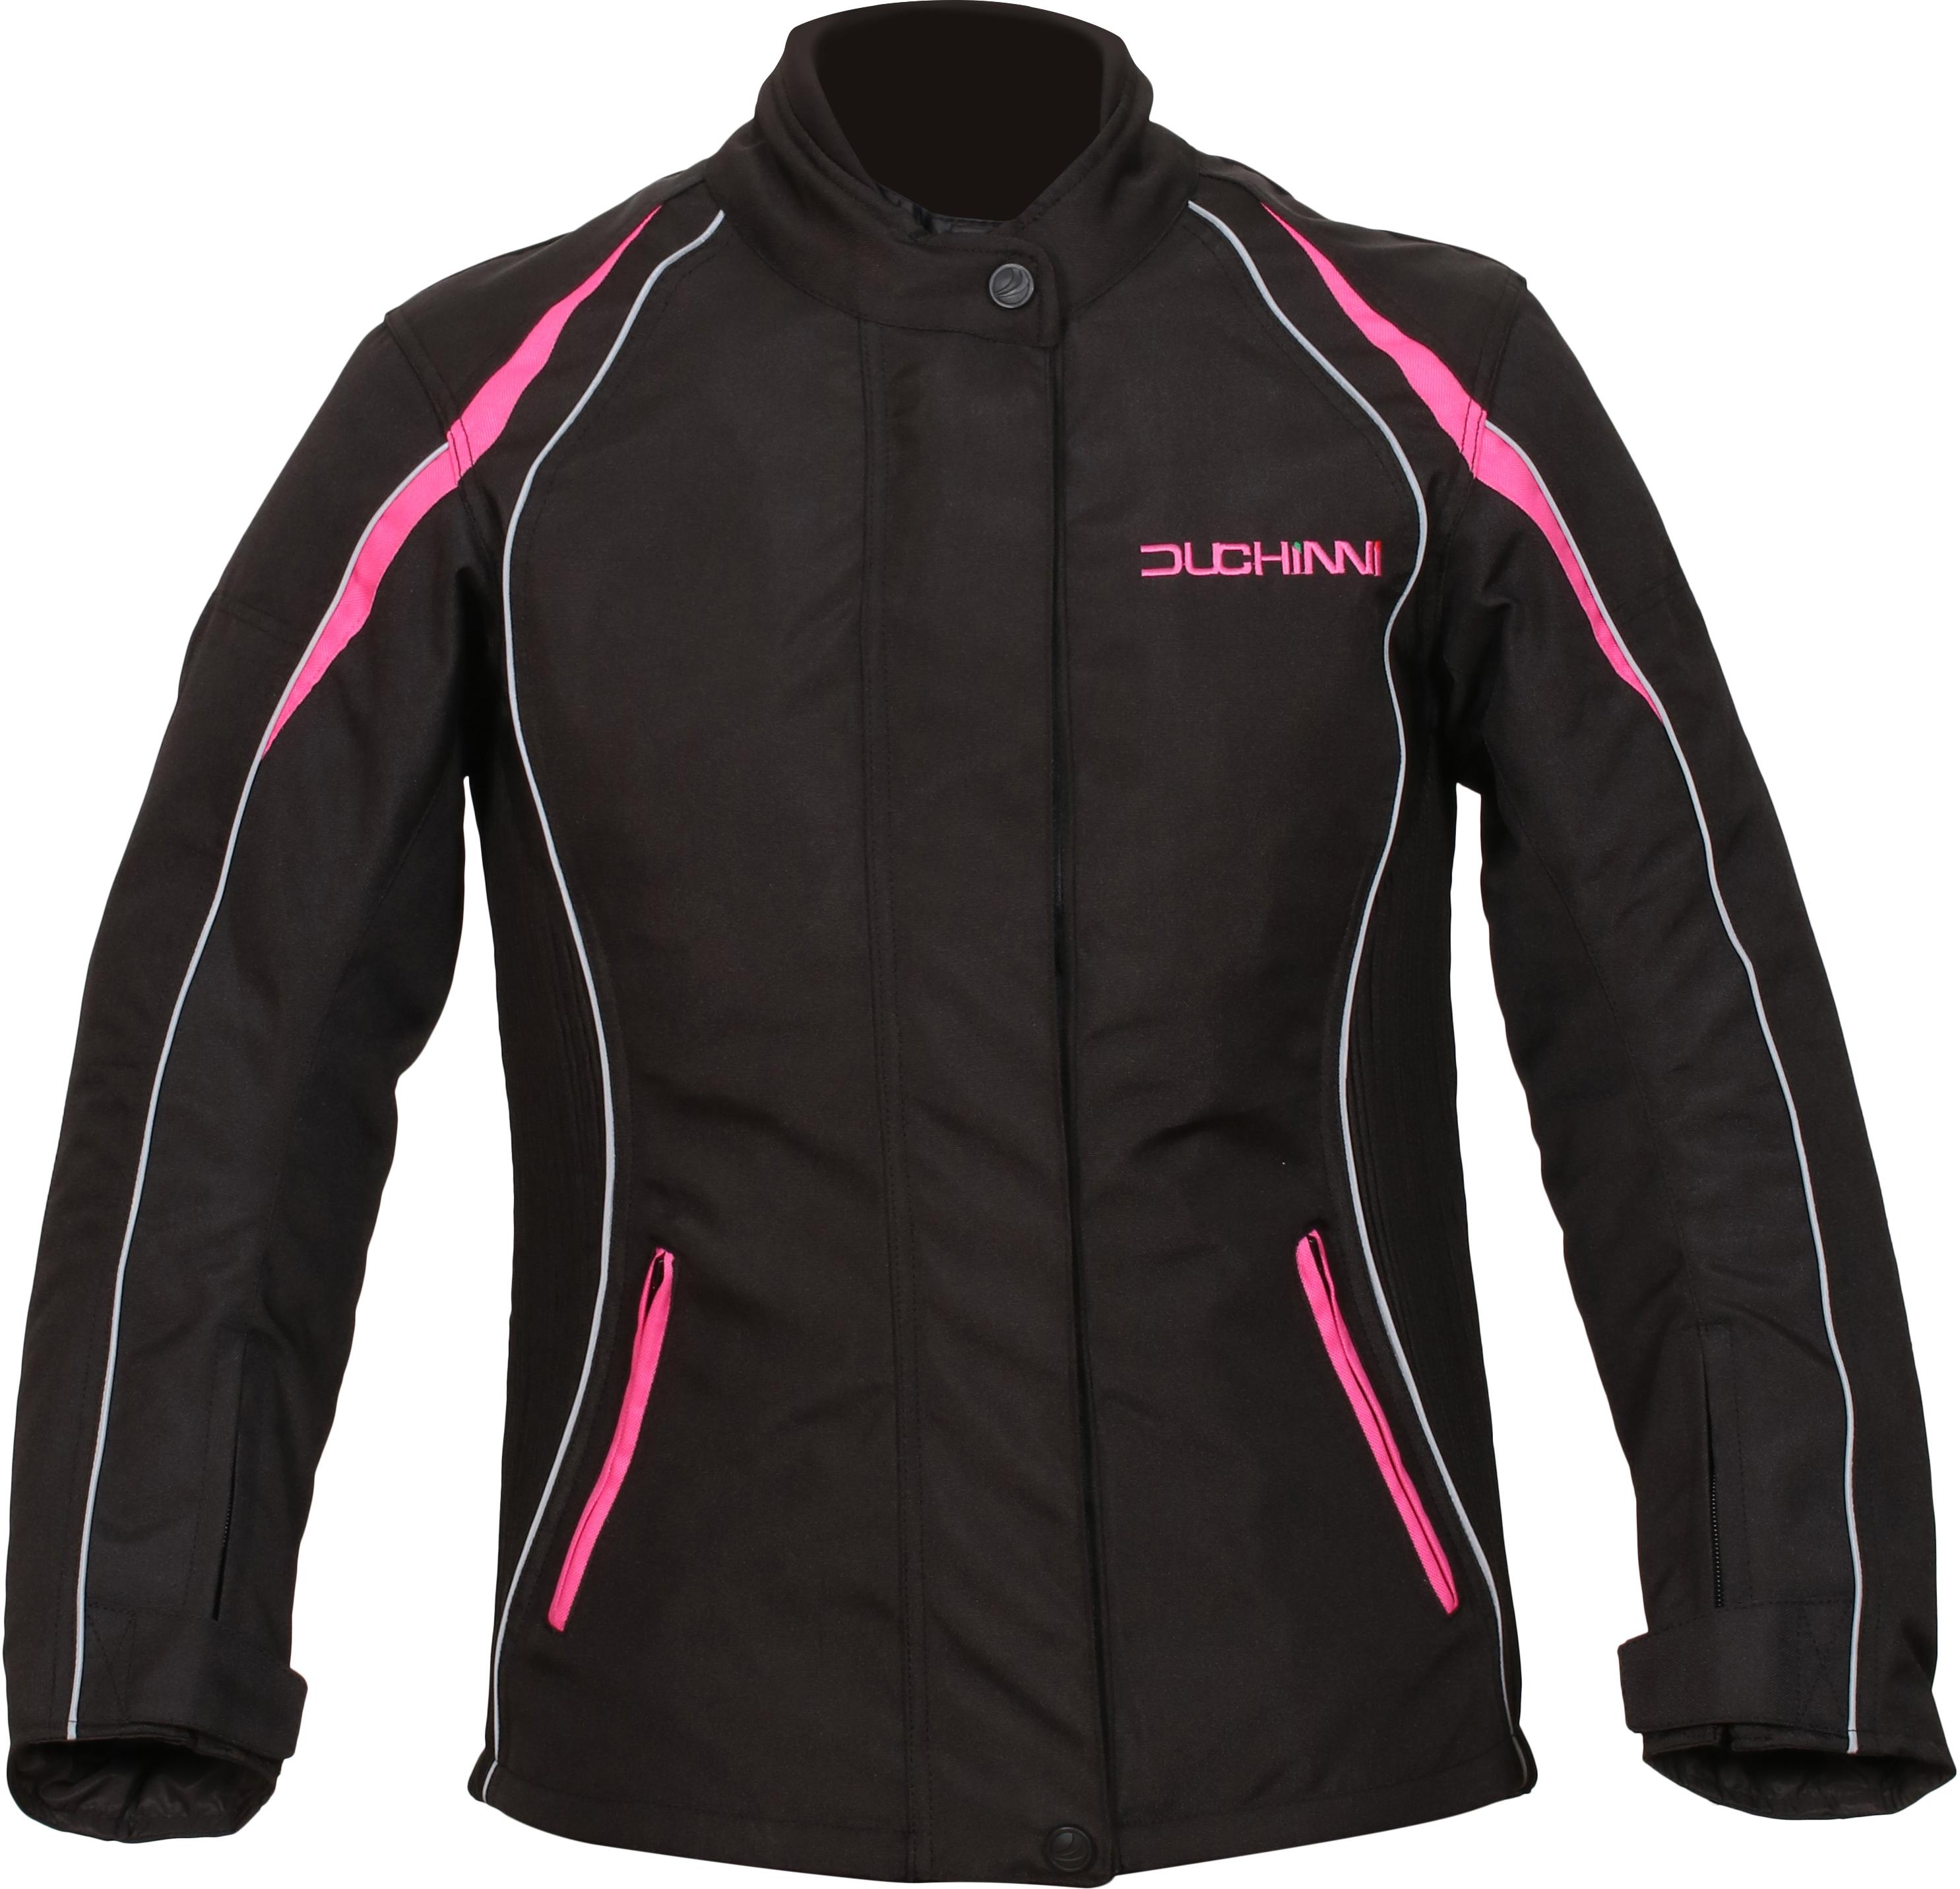 Duchinni Vienna Ladies Motorcycle Jacket - Black And Pink, 22